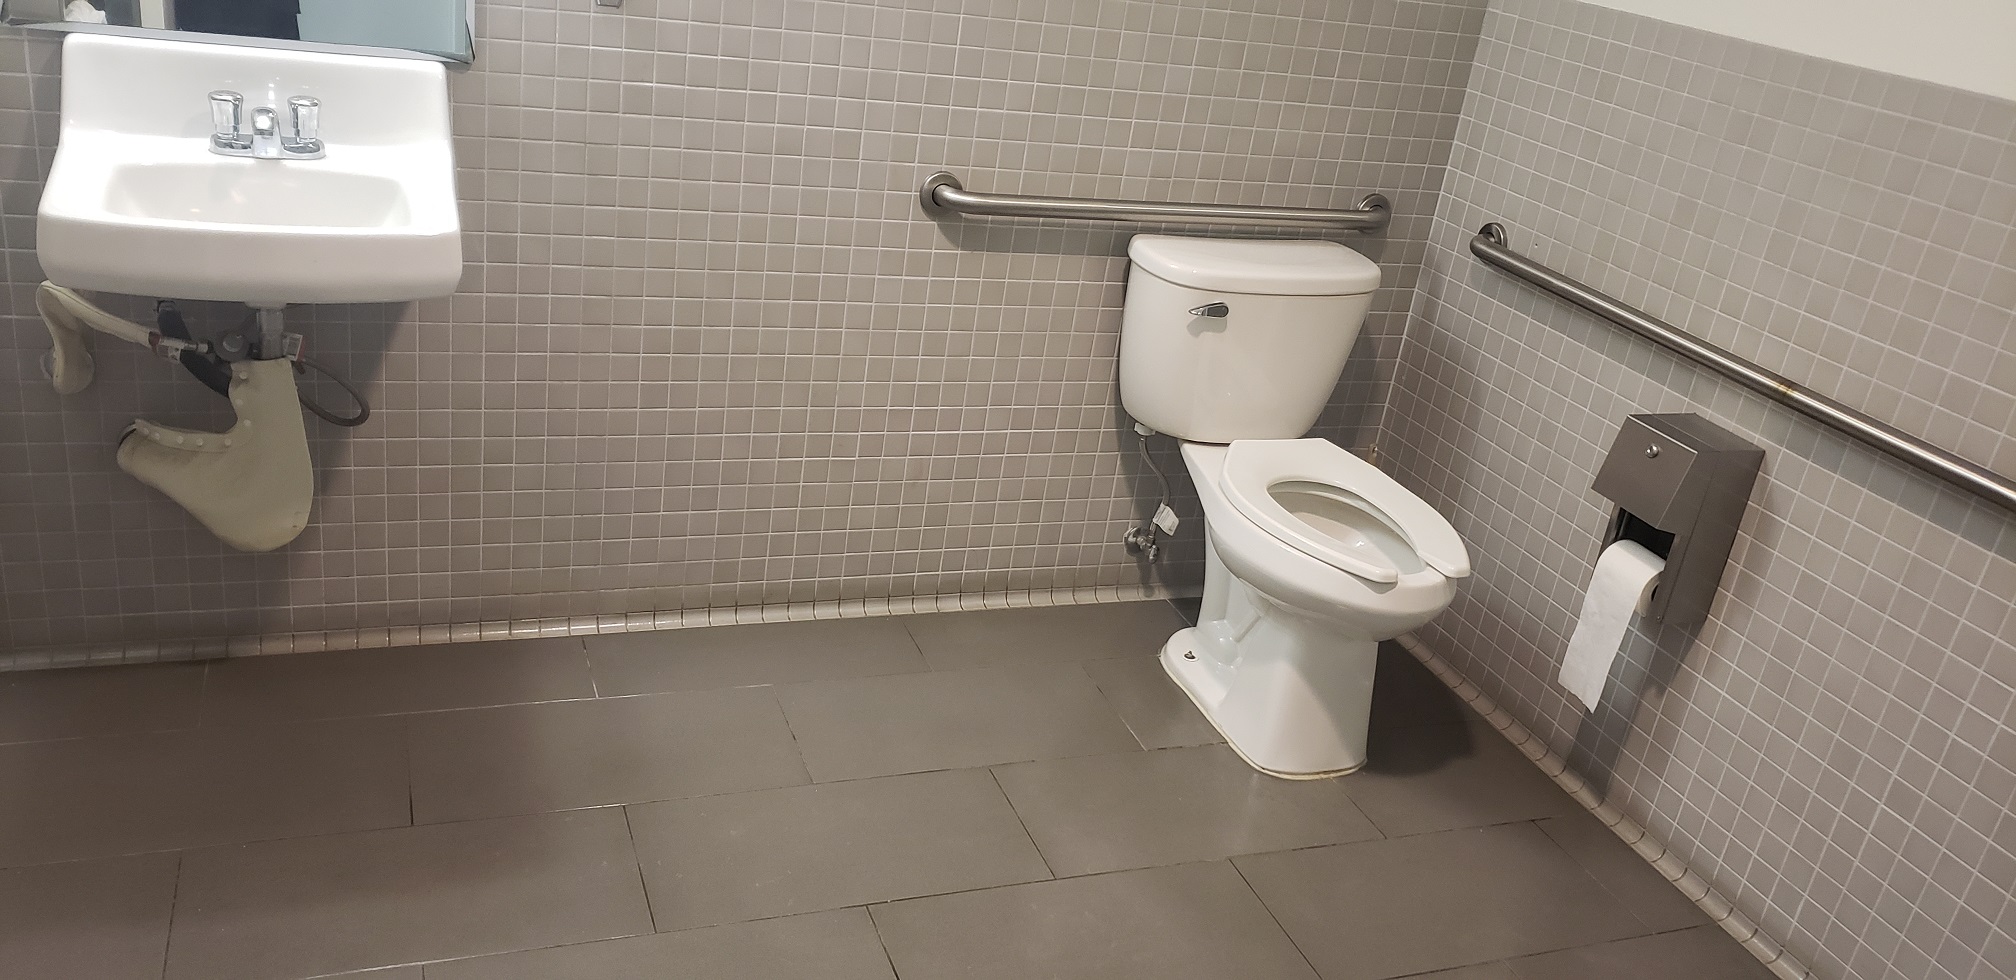 Image of the community room bathroom